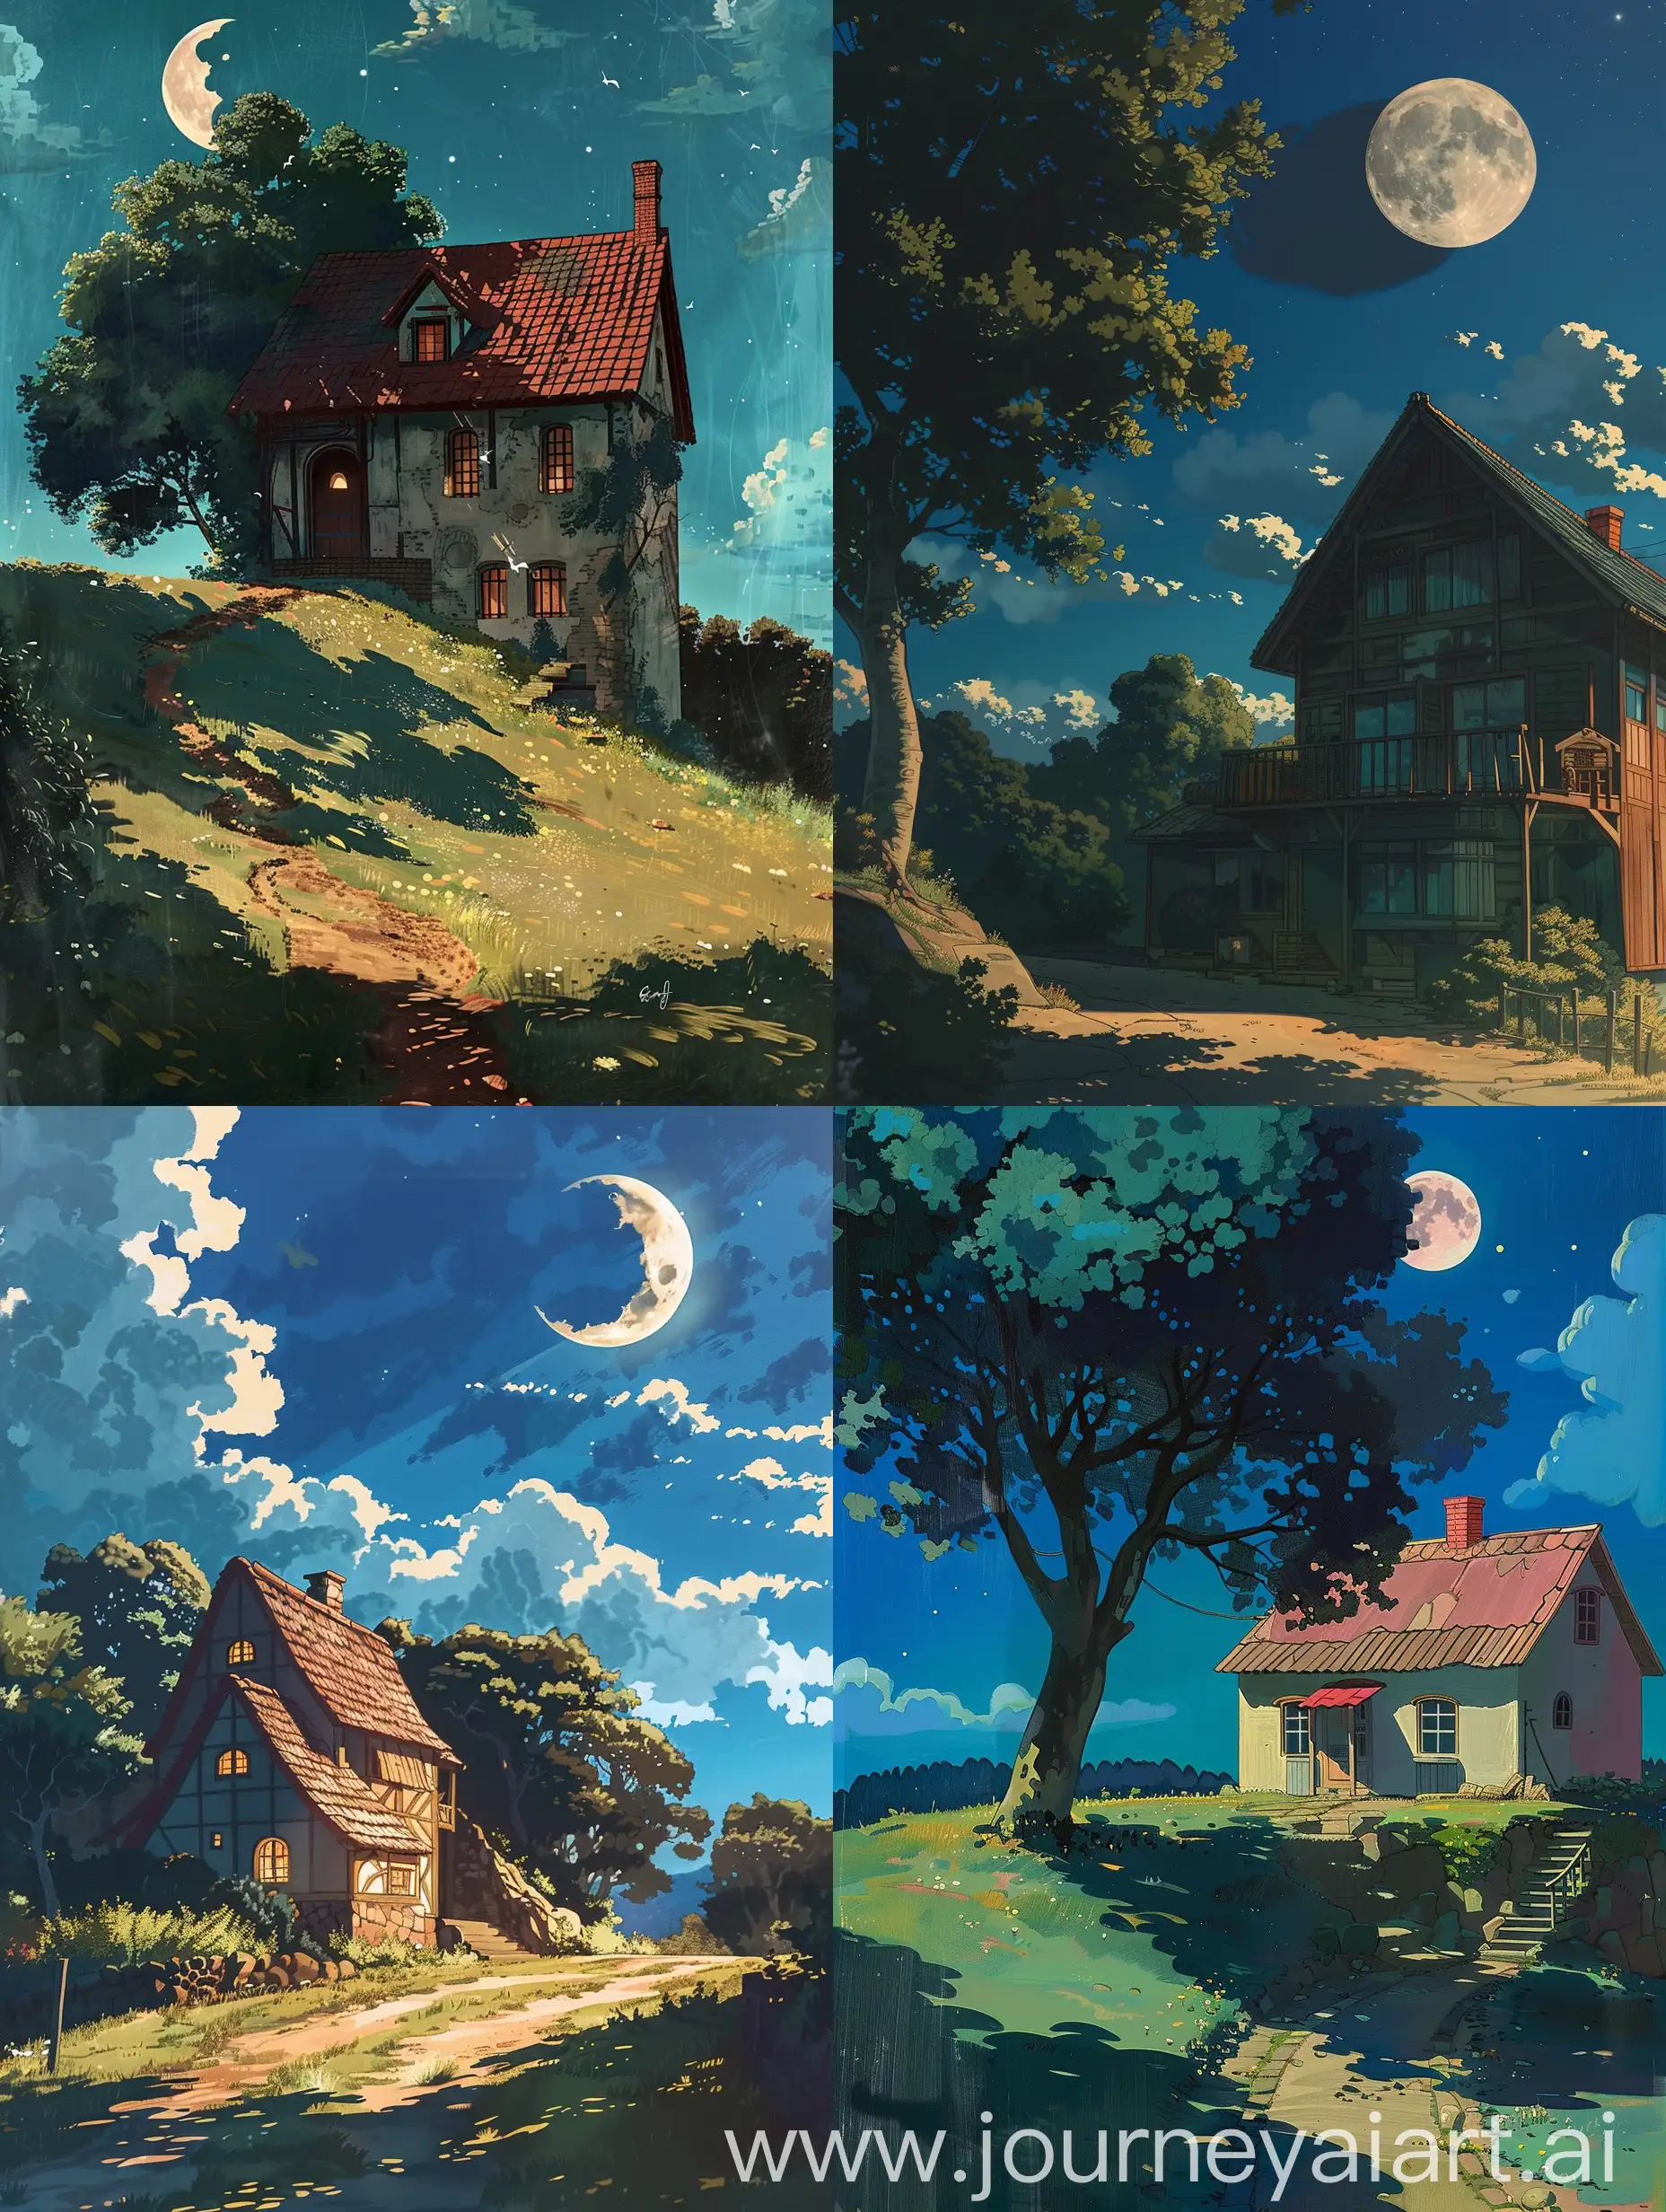 Cozy-House-Near-Hill-under-Moonlight-in-Studio-Ghibli-Anime-Style